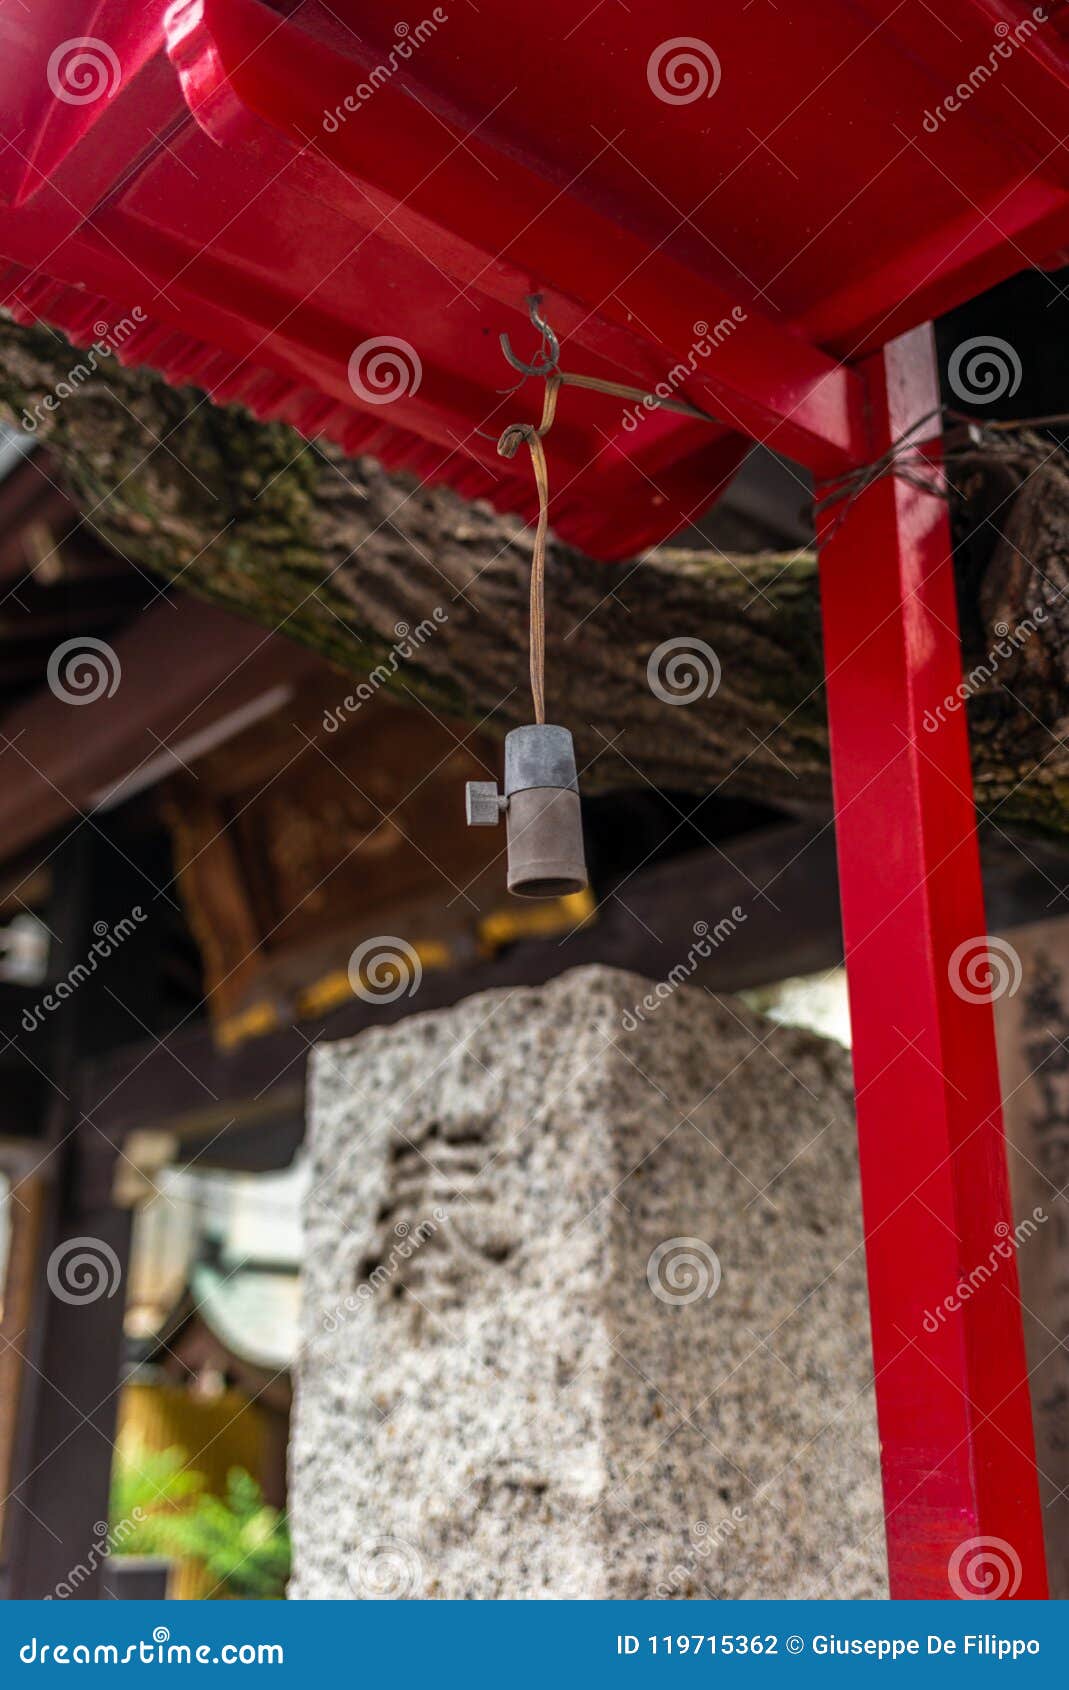 details in a shintoist shrine in tokyo